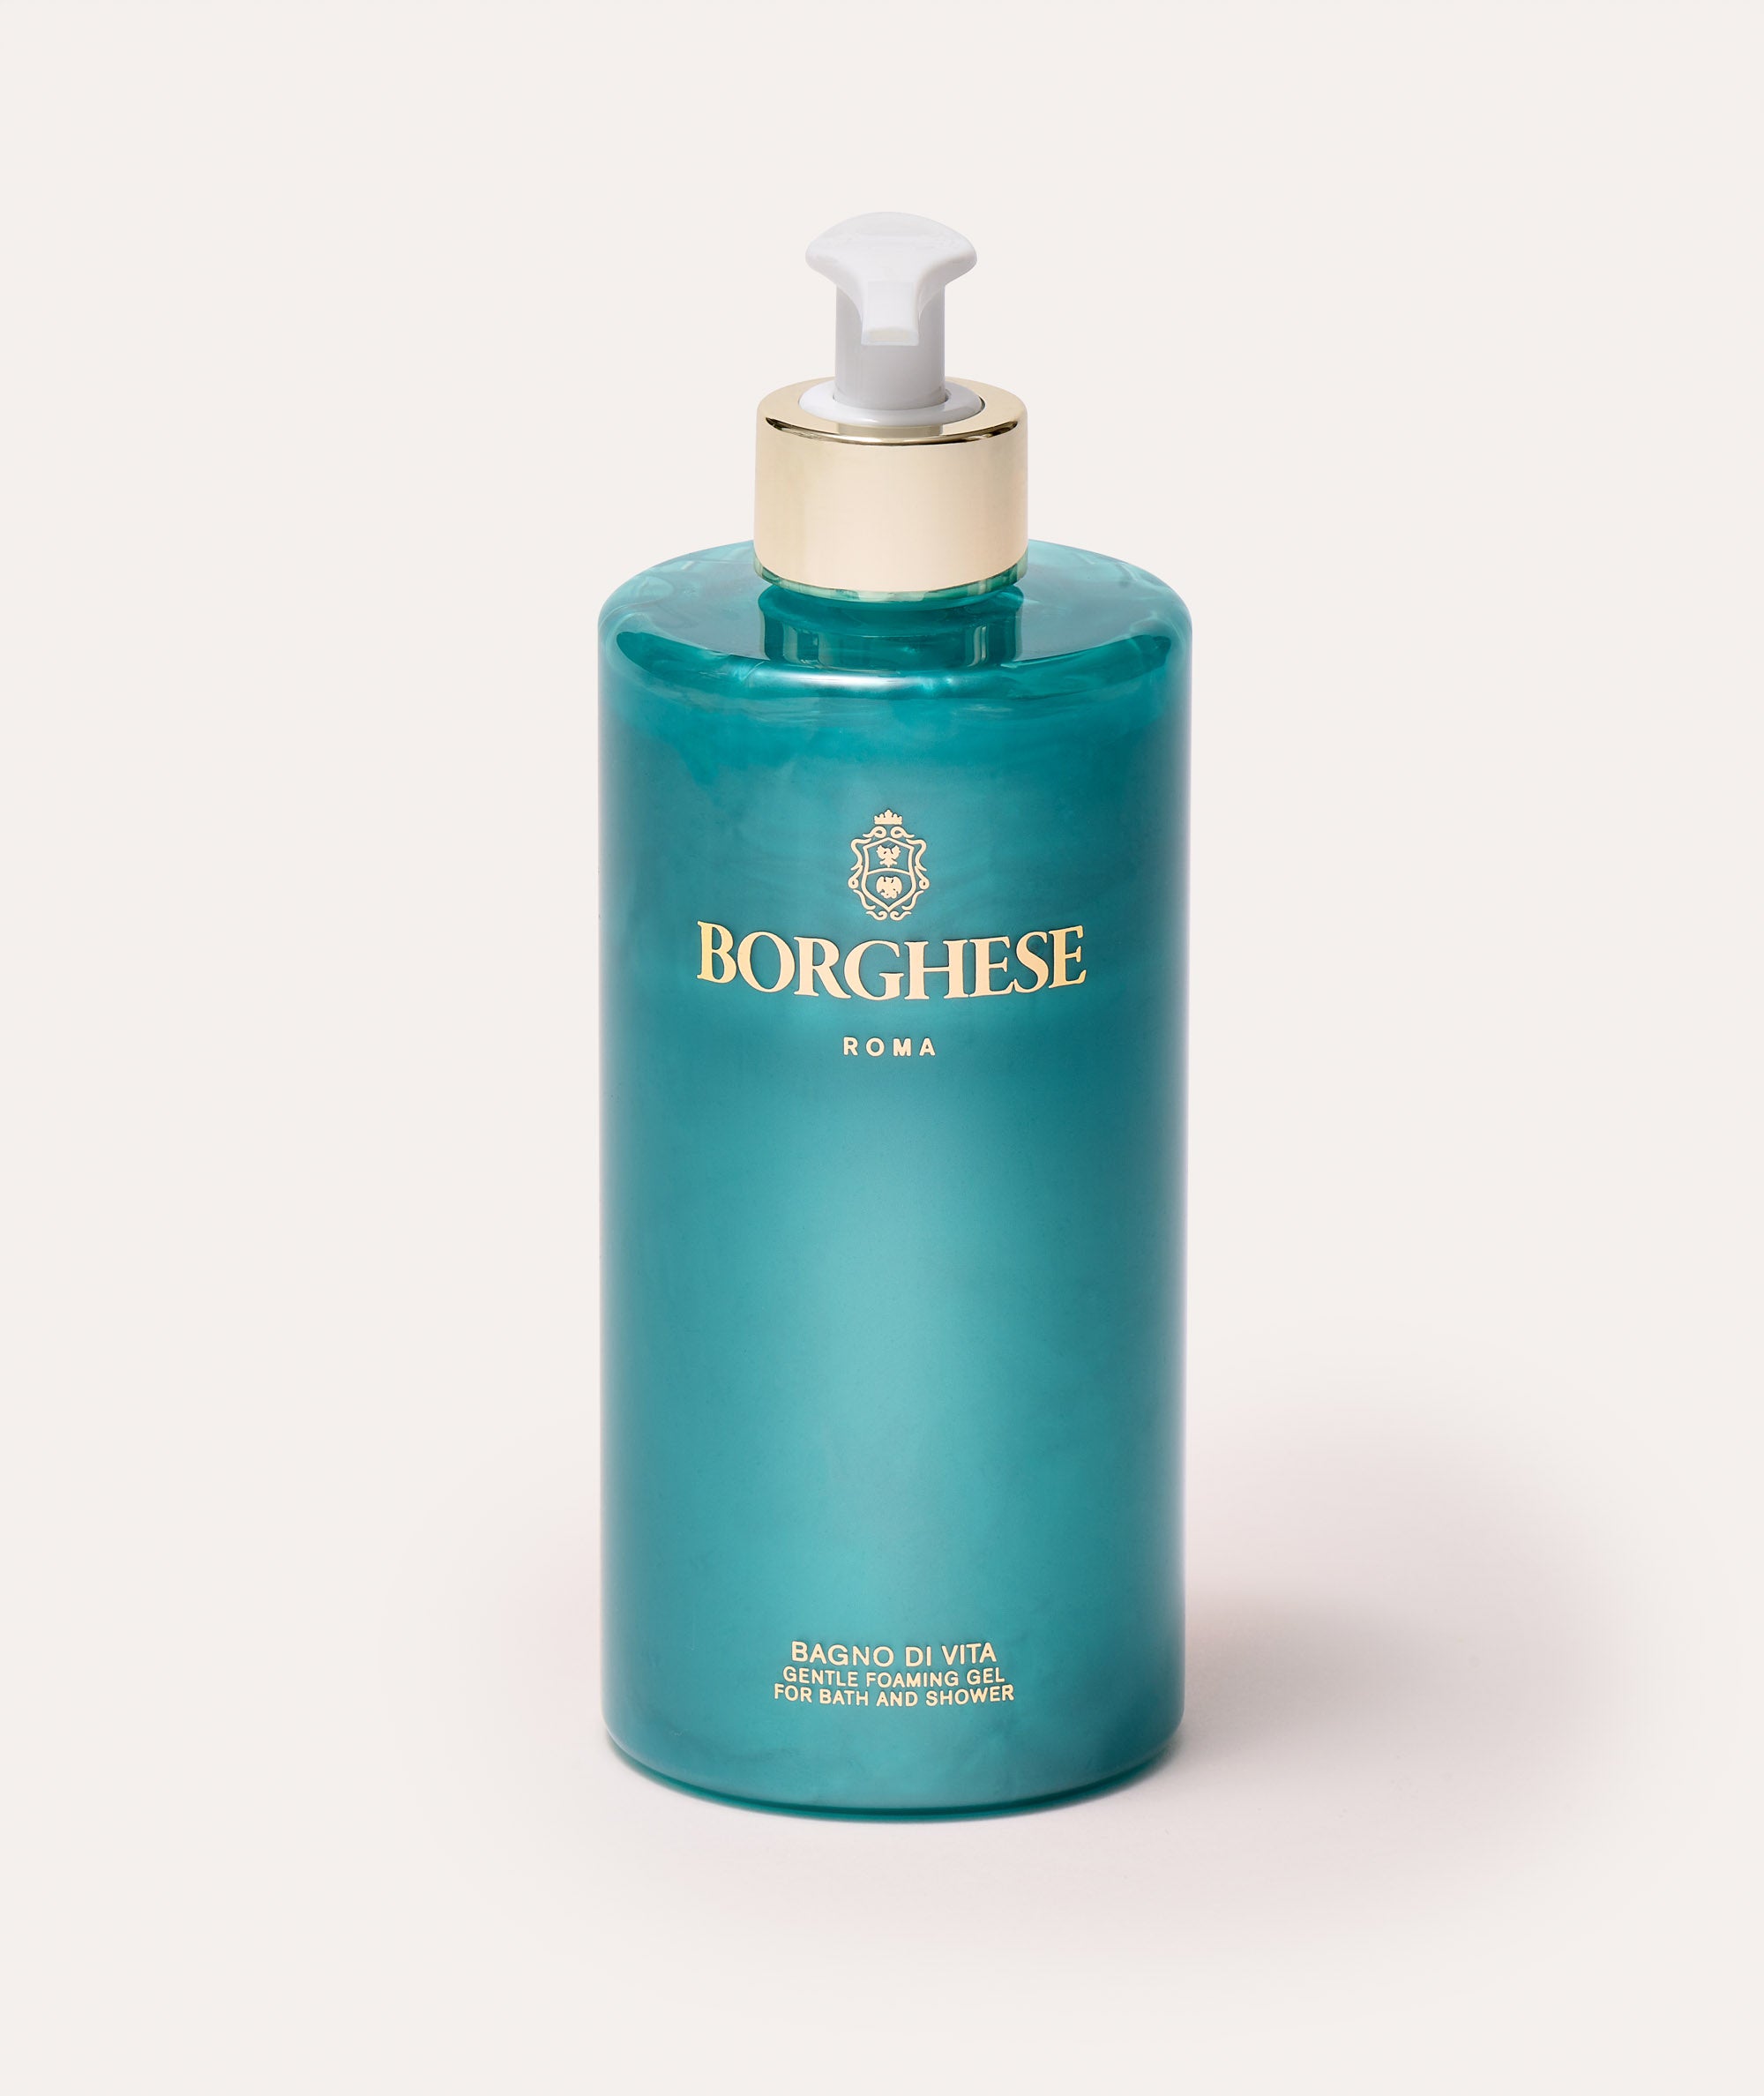 Picture of Borghese Bagno di Vita Bath Gel in bottle